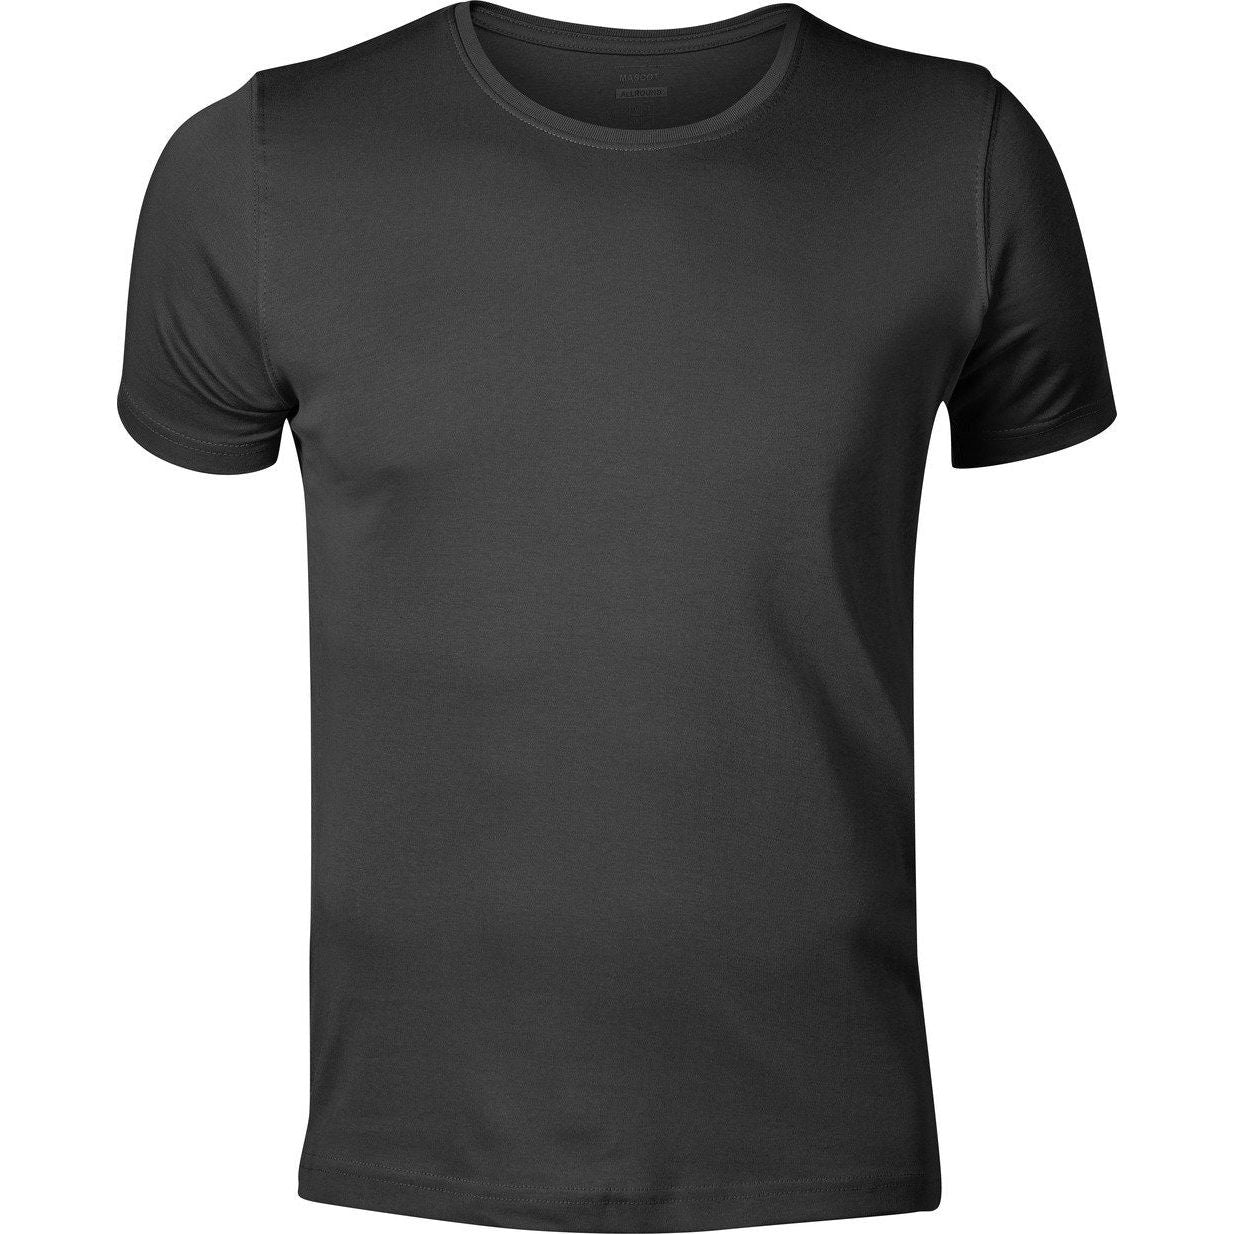 Mascot Vence T-shirt Slim-Fit Dark Anthracite Grey 51585-967-18 Front